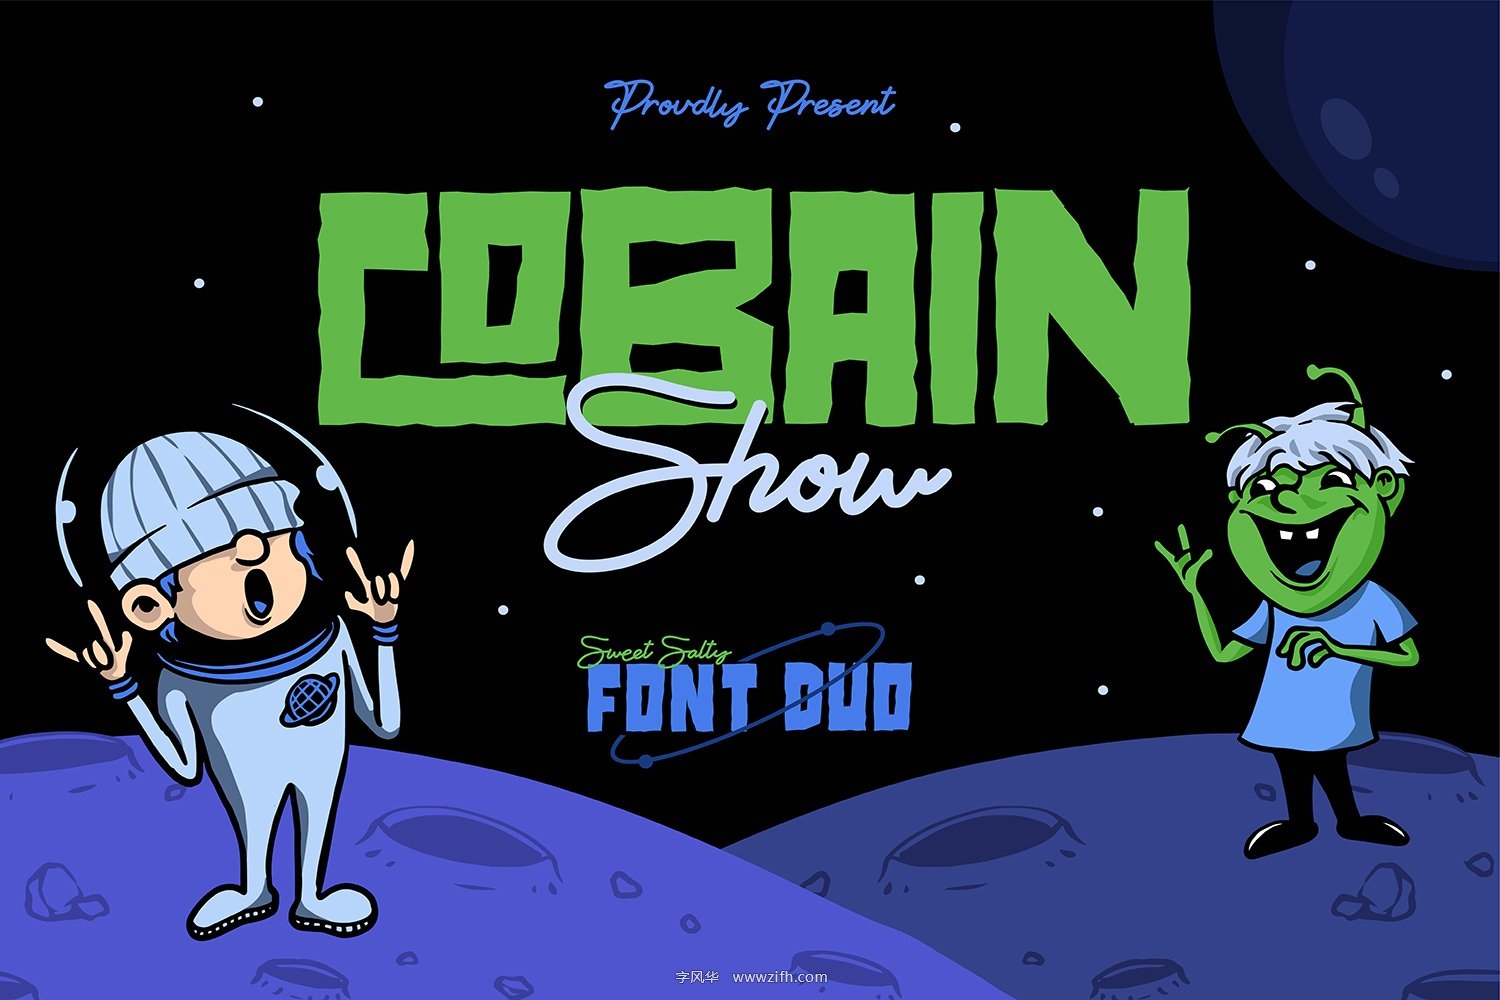 Cobain Show Font.jpg